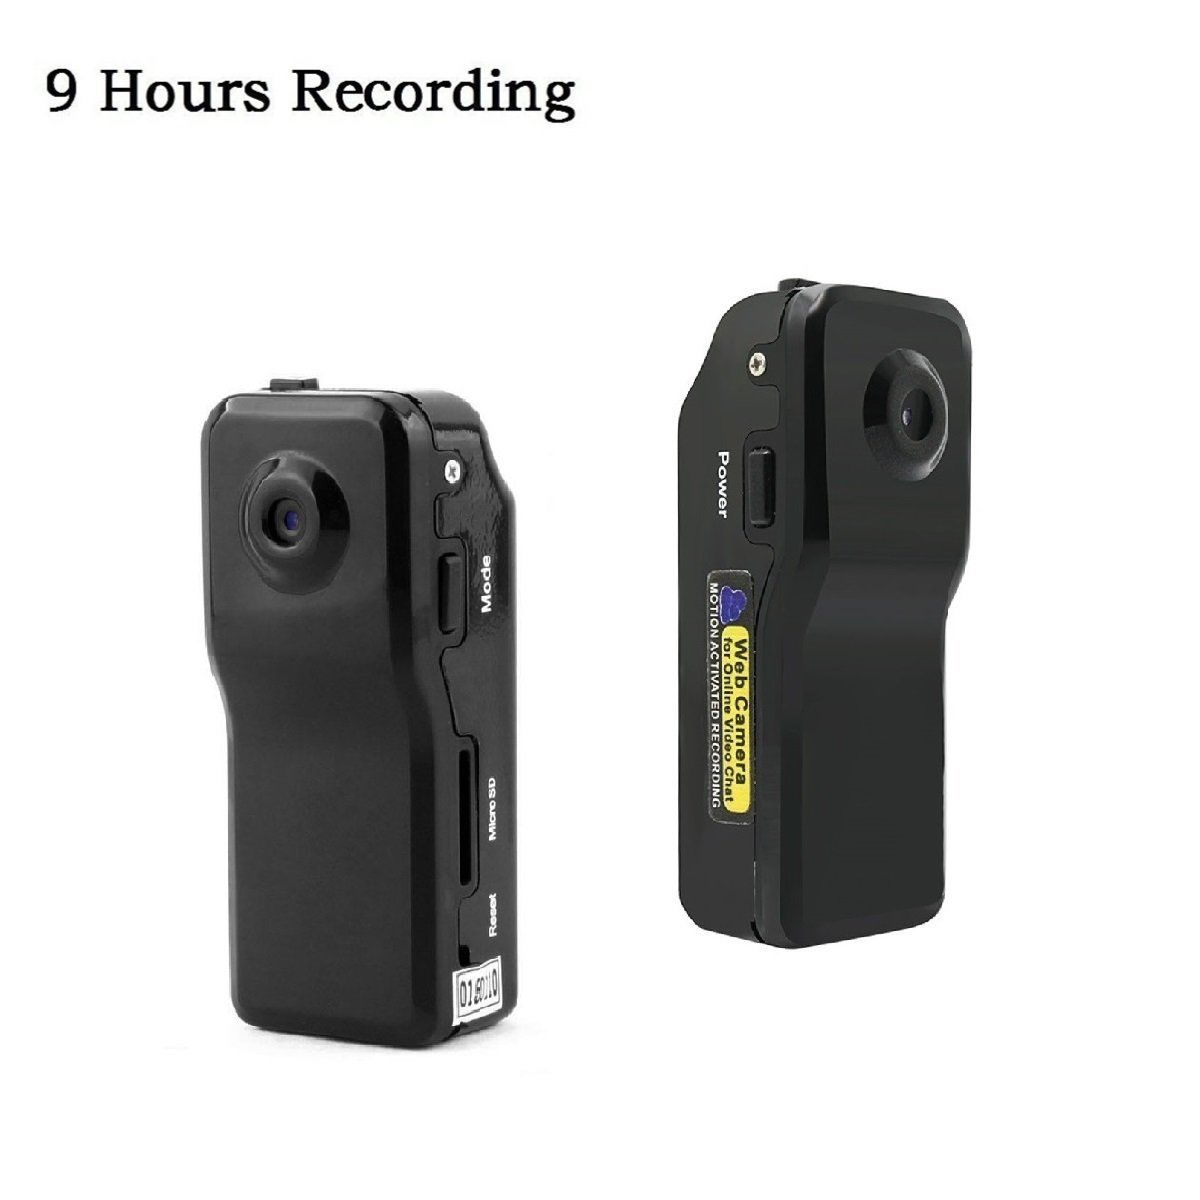 Mini լրտես տեսախցիկ 960P HD Թաքնված Noise ակտիվացում Դայակ Camera հետ շարժման հայտնաբերման - Հիմնական